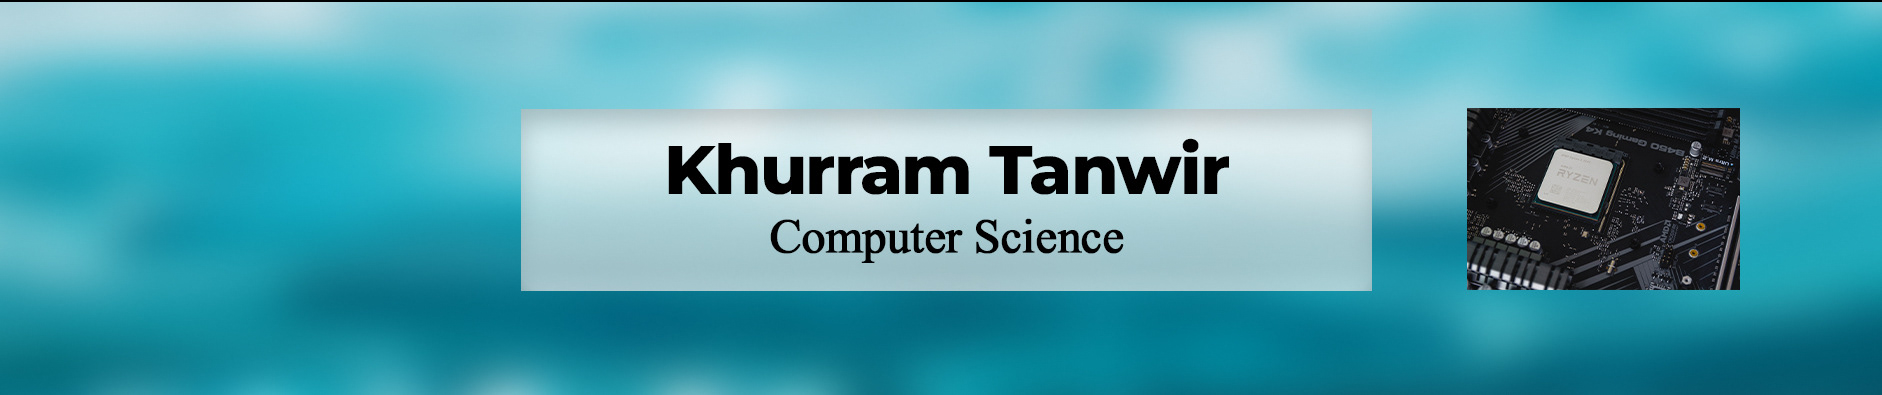 Khurram Tanwir's profile banner